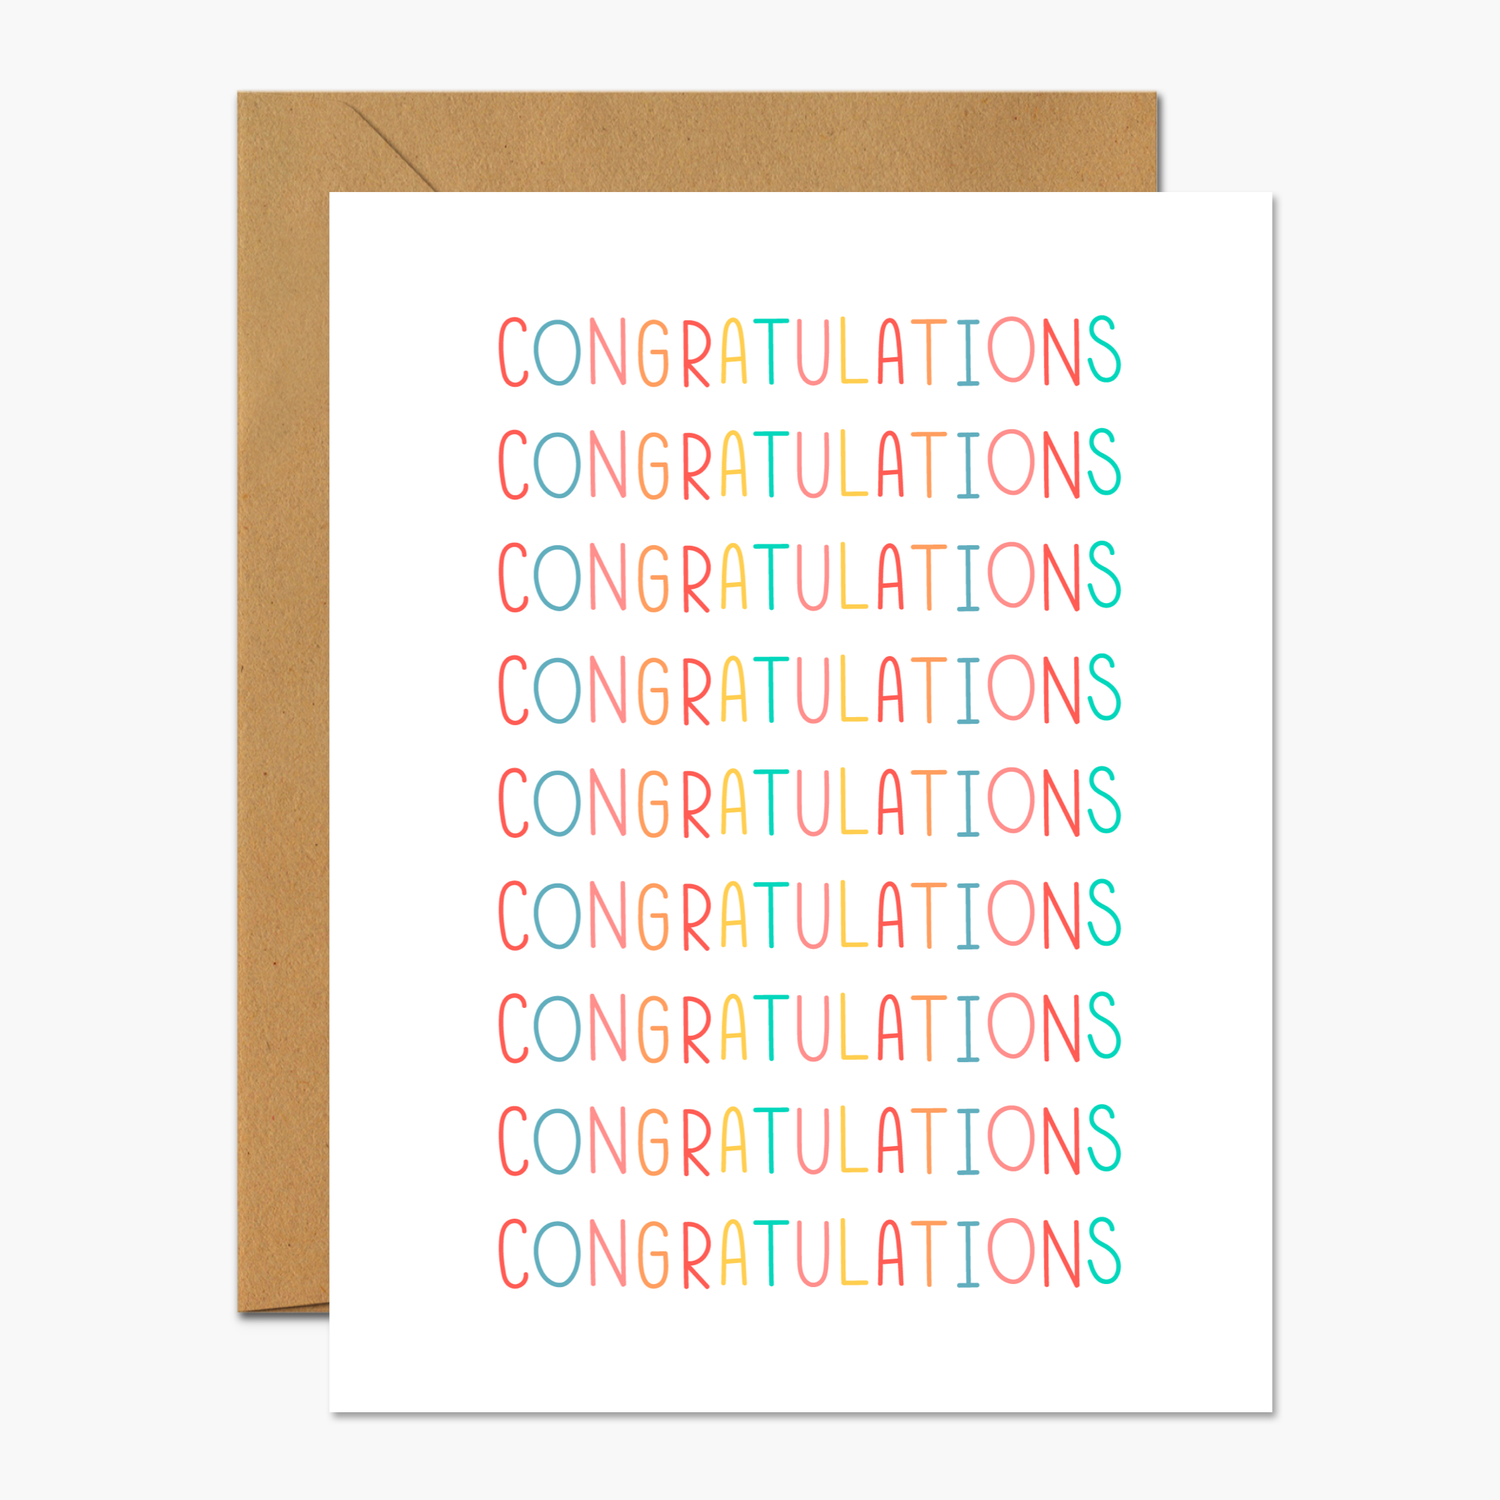 Congratulations Colorful Congrats Greeting Card | Footnotes Paper